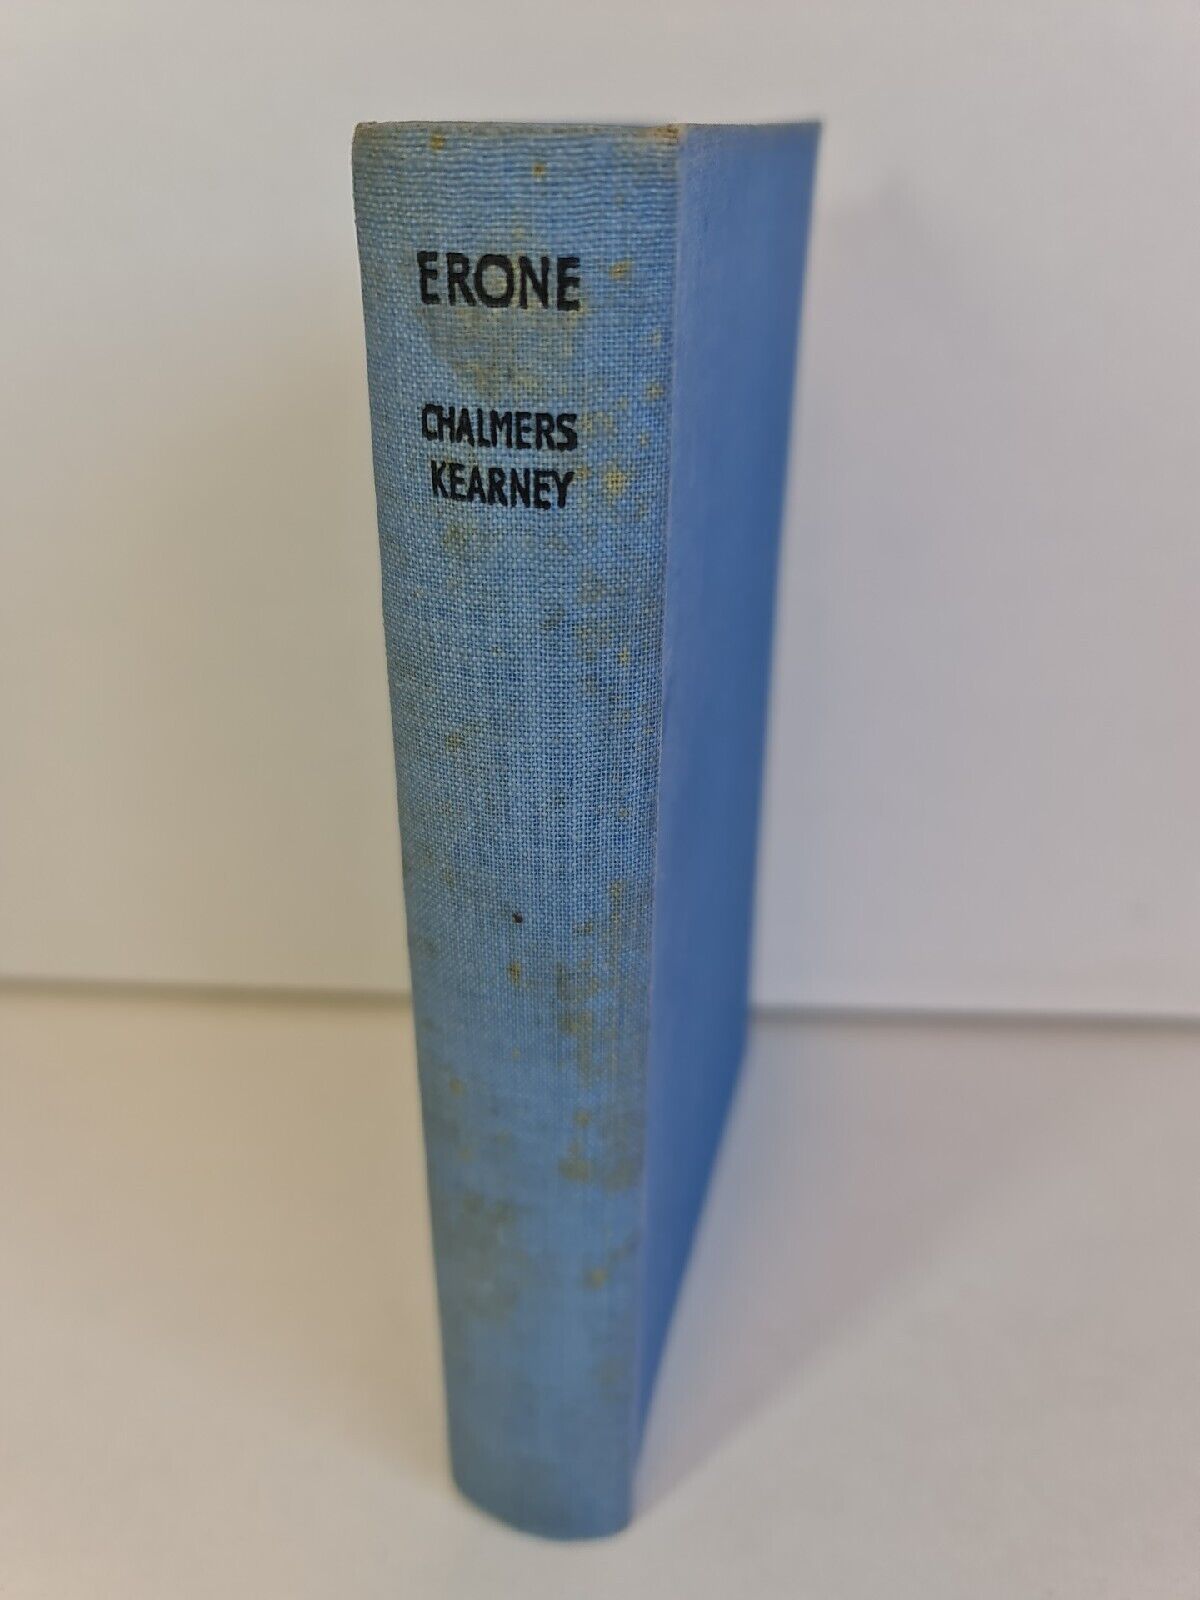 Erone by Chalmers Kearney (1950)